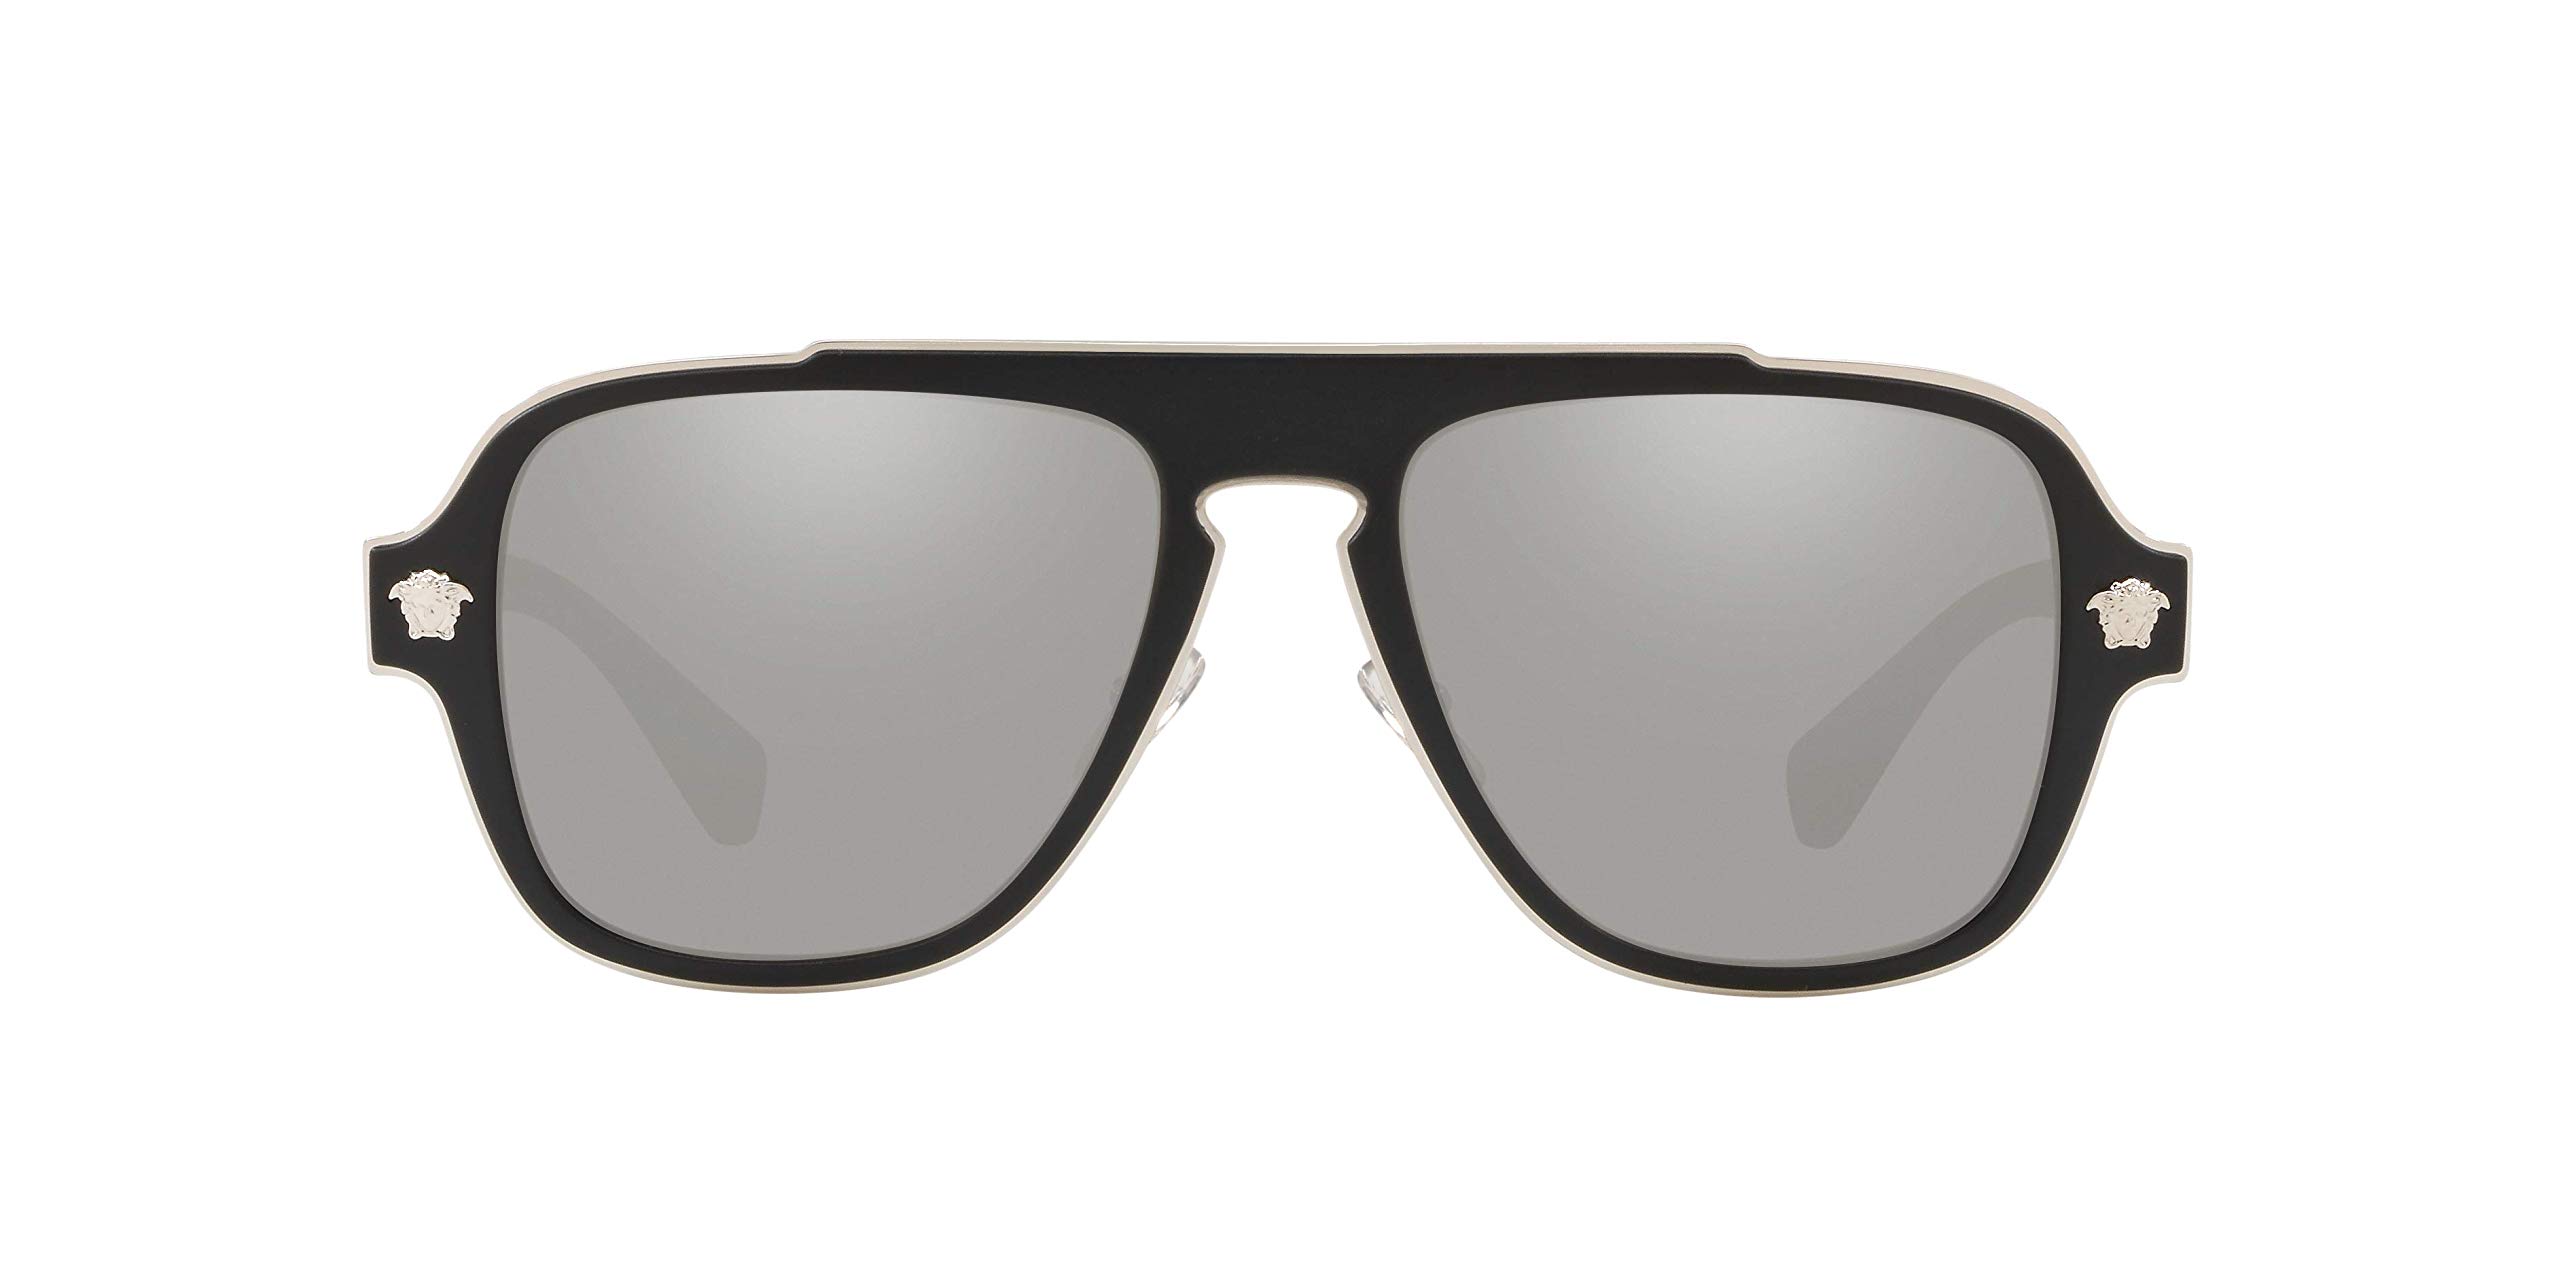 Versace Man Sunglasses Black Frame, Light Grey Mirror Silver Lenses, 56MM